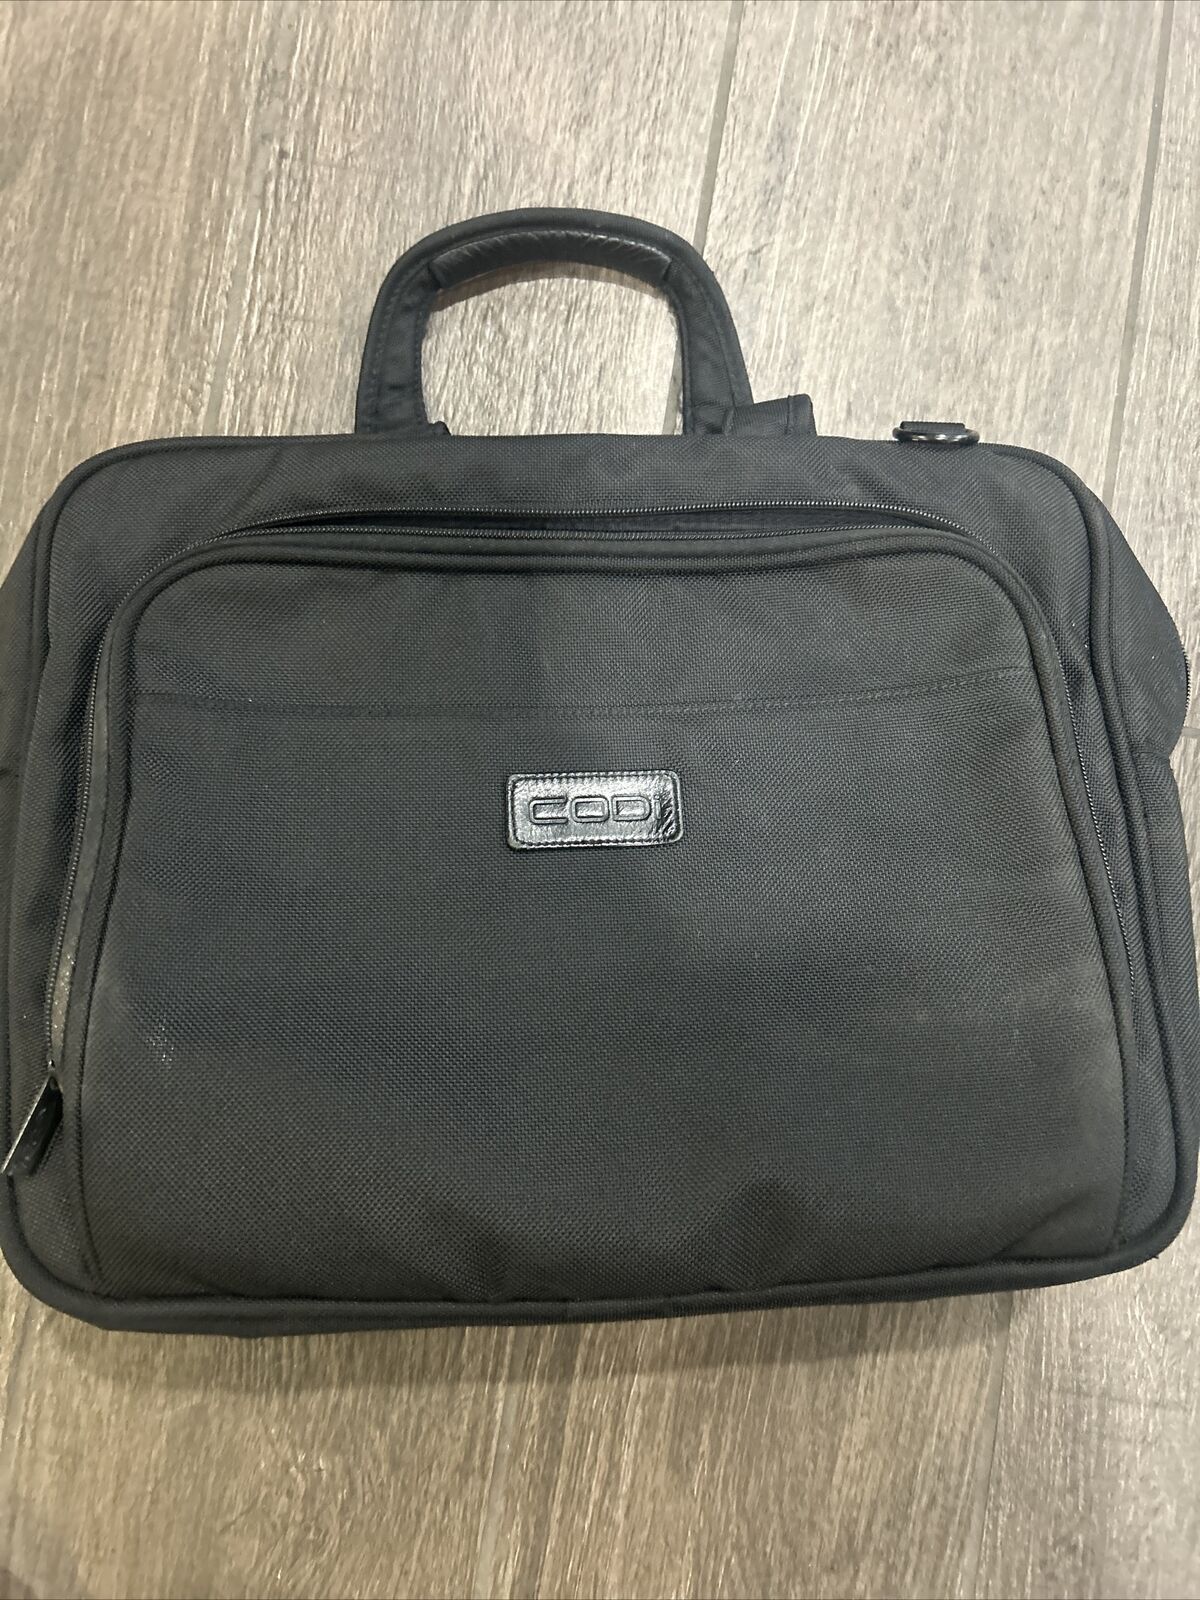 CODi Bag Laptop Computer Shoulder Travel Briefcase nylon